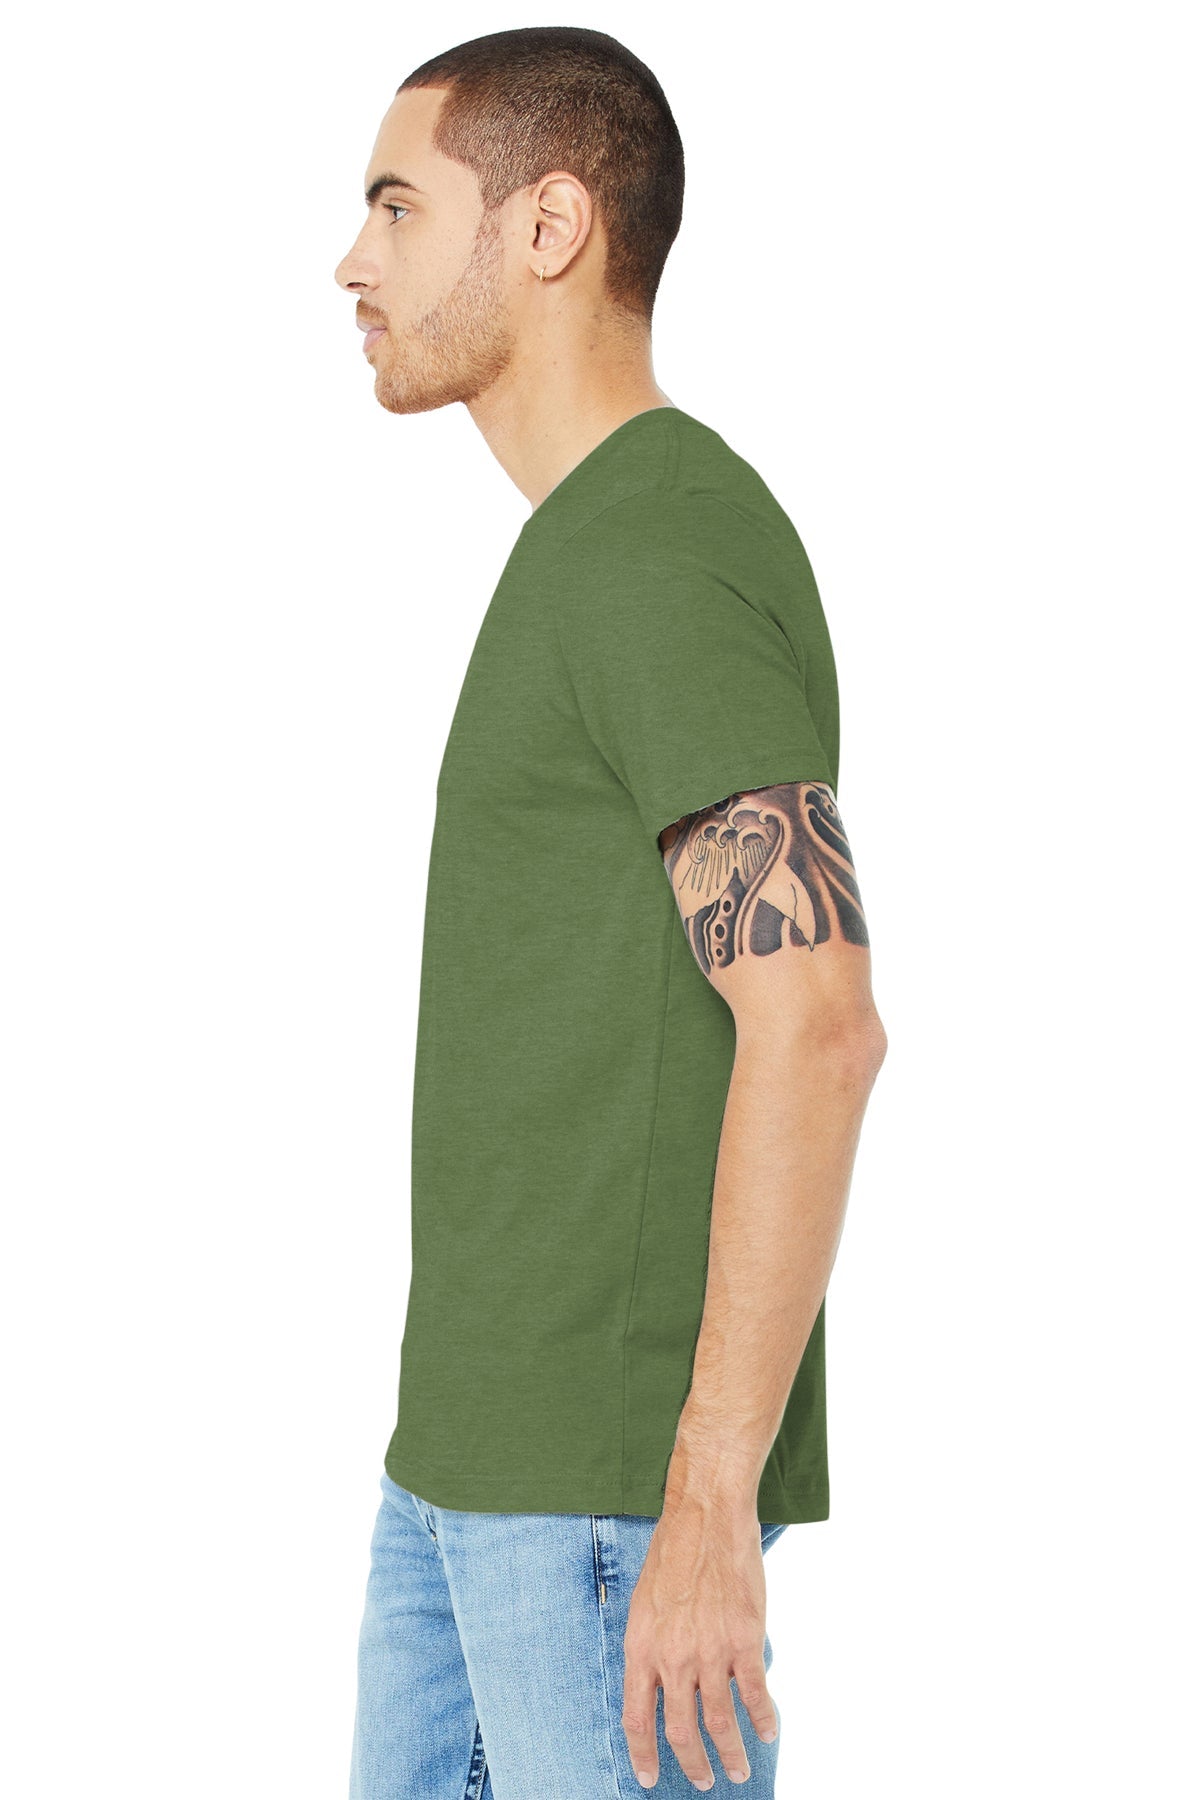 bella + canvas unisex jersey short sleeve t-shirt 3001c heather green